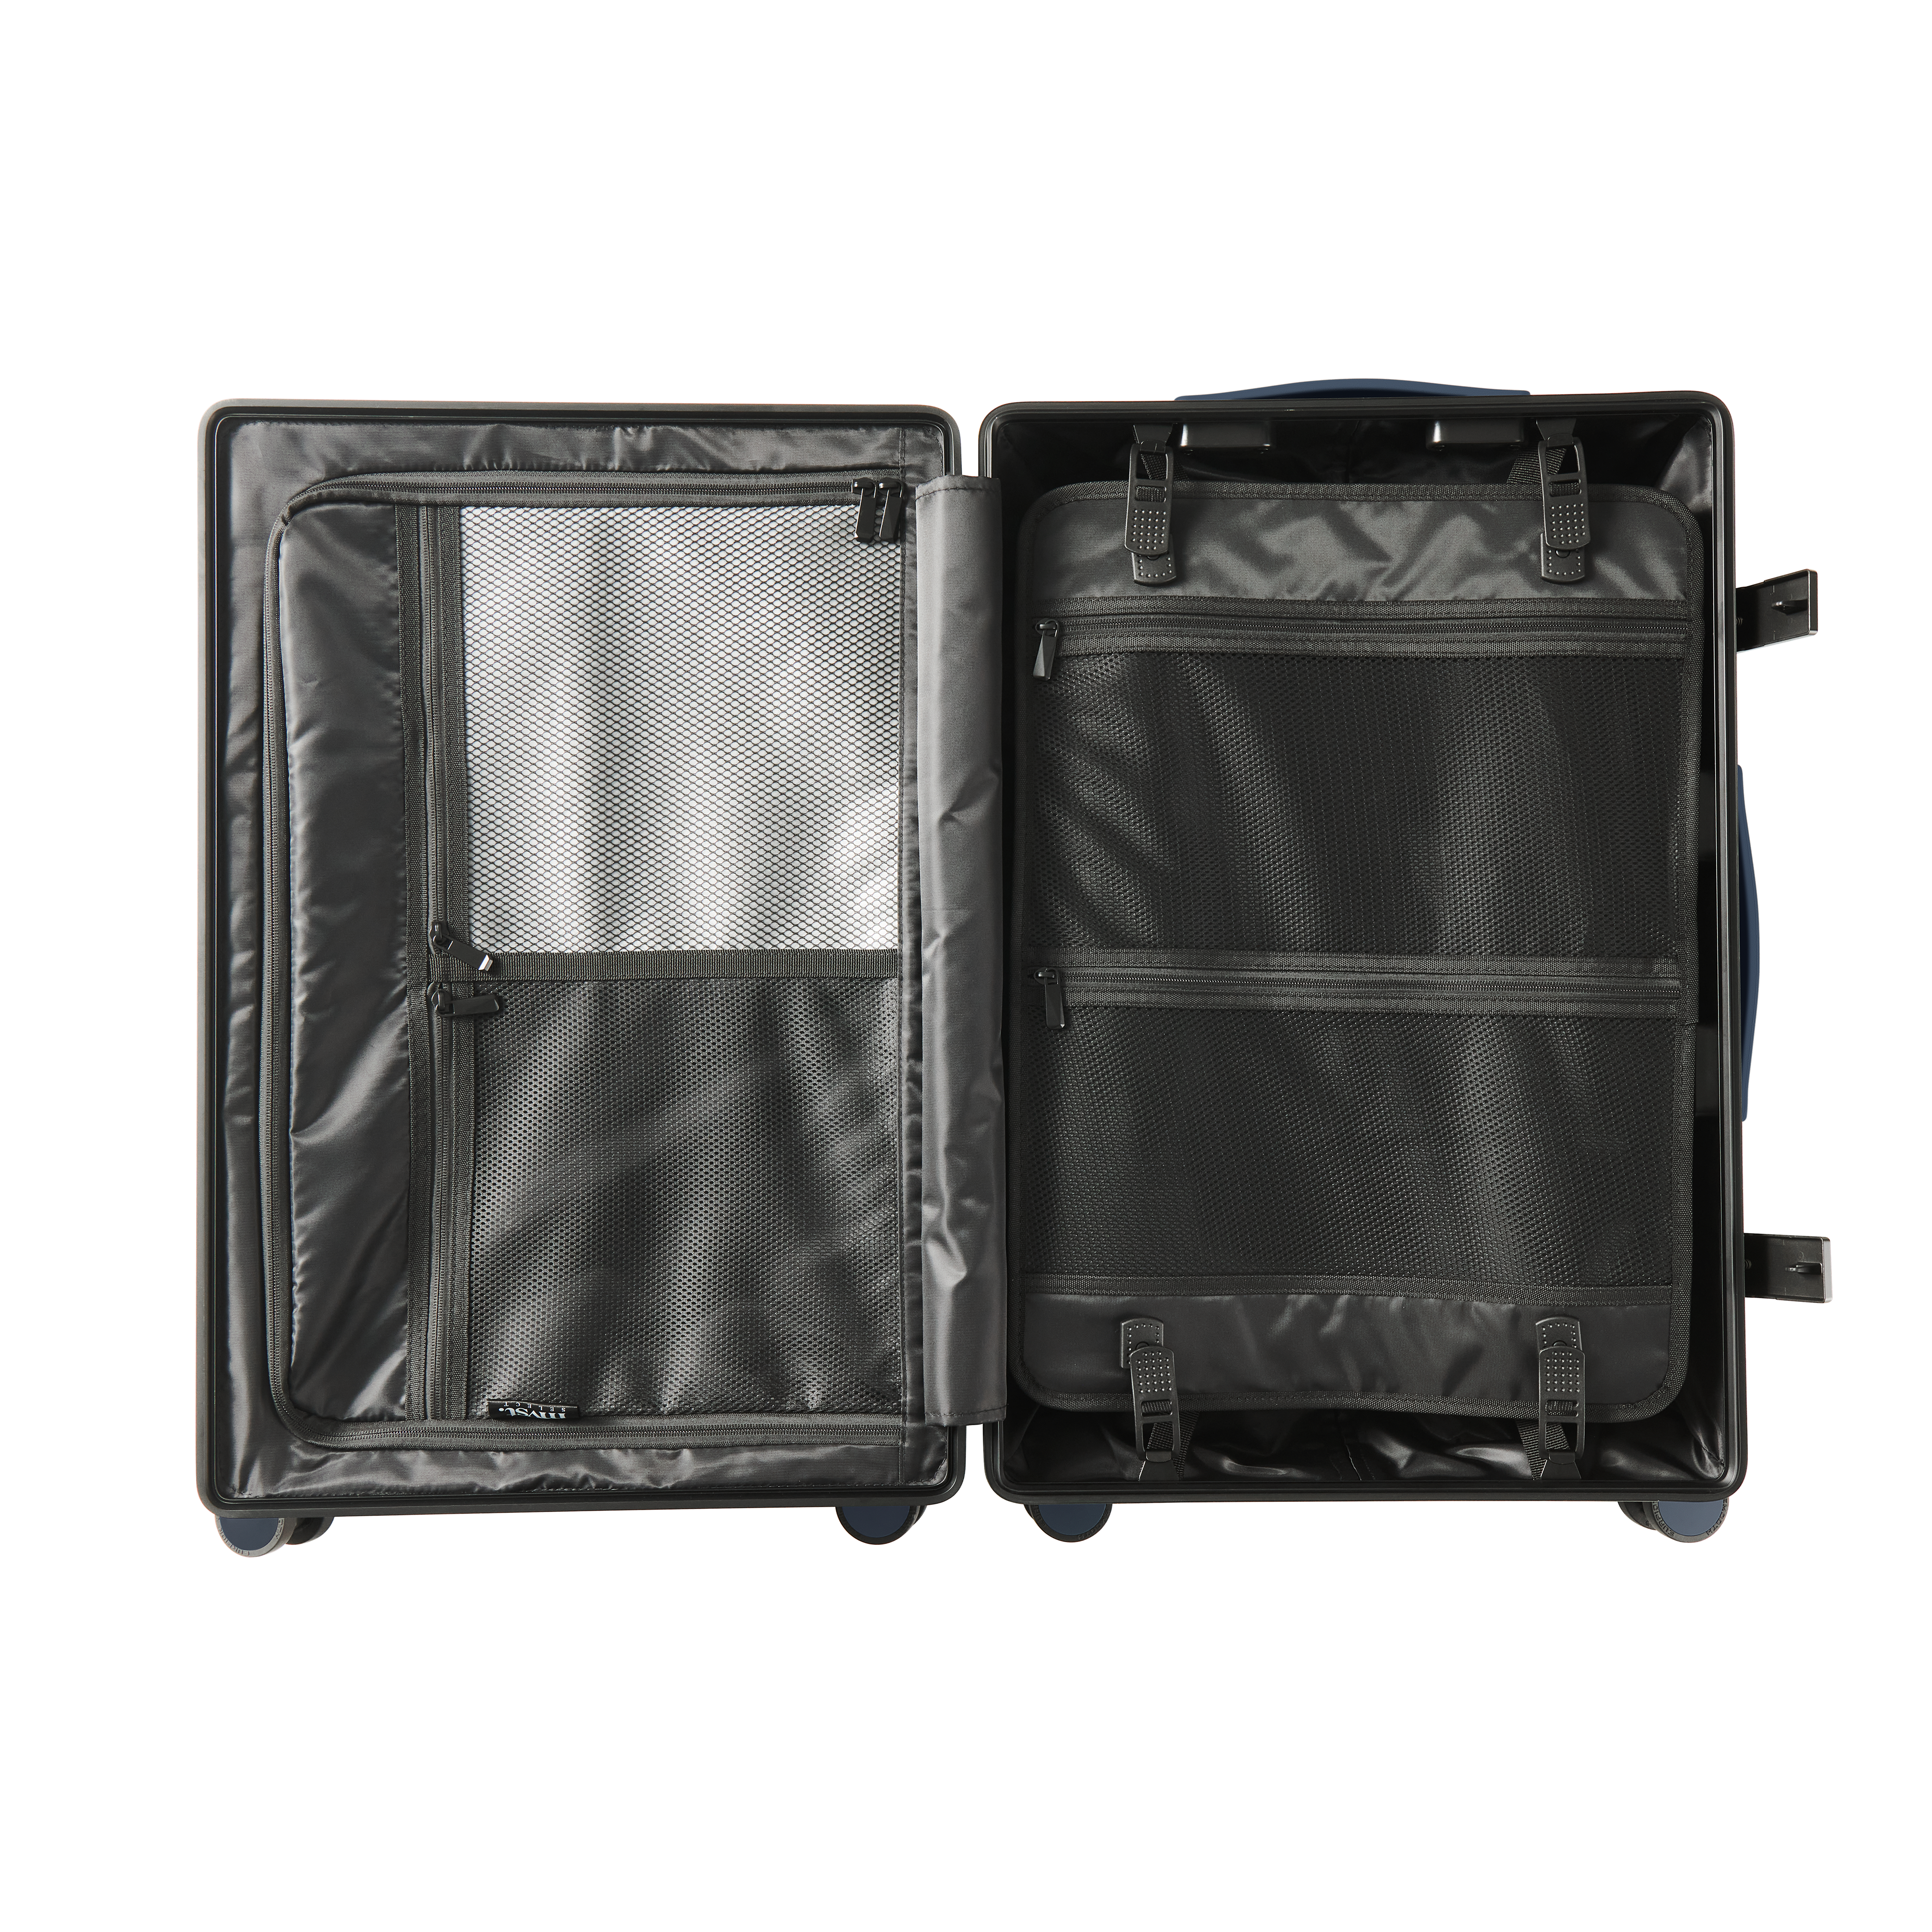 C45 Polycarbonate Suitcase Navy MVST